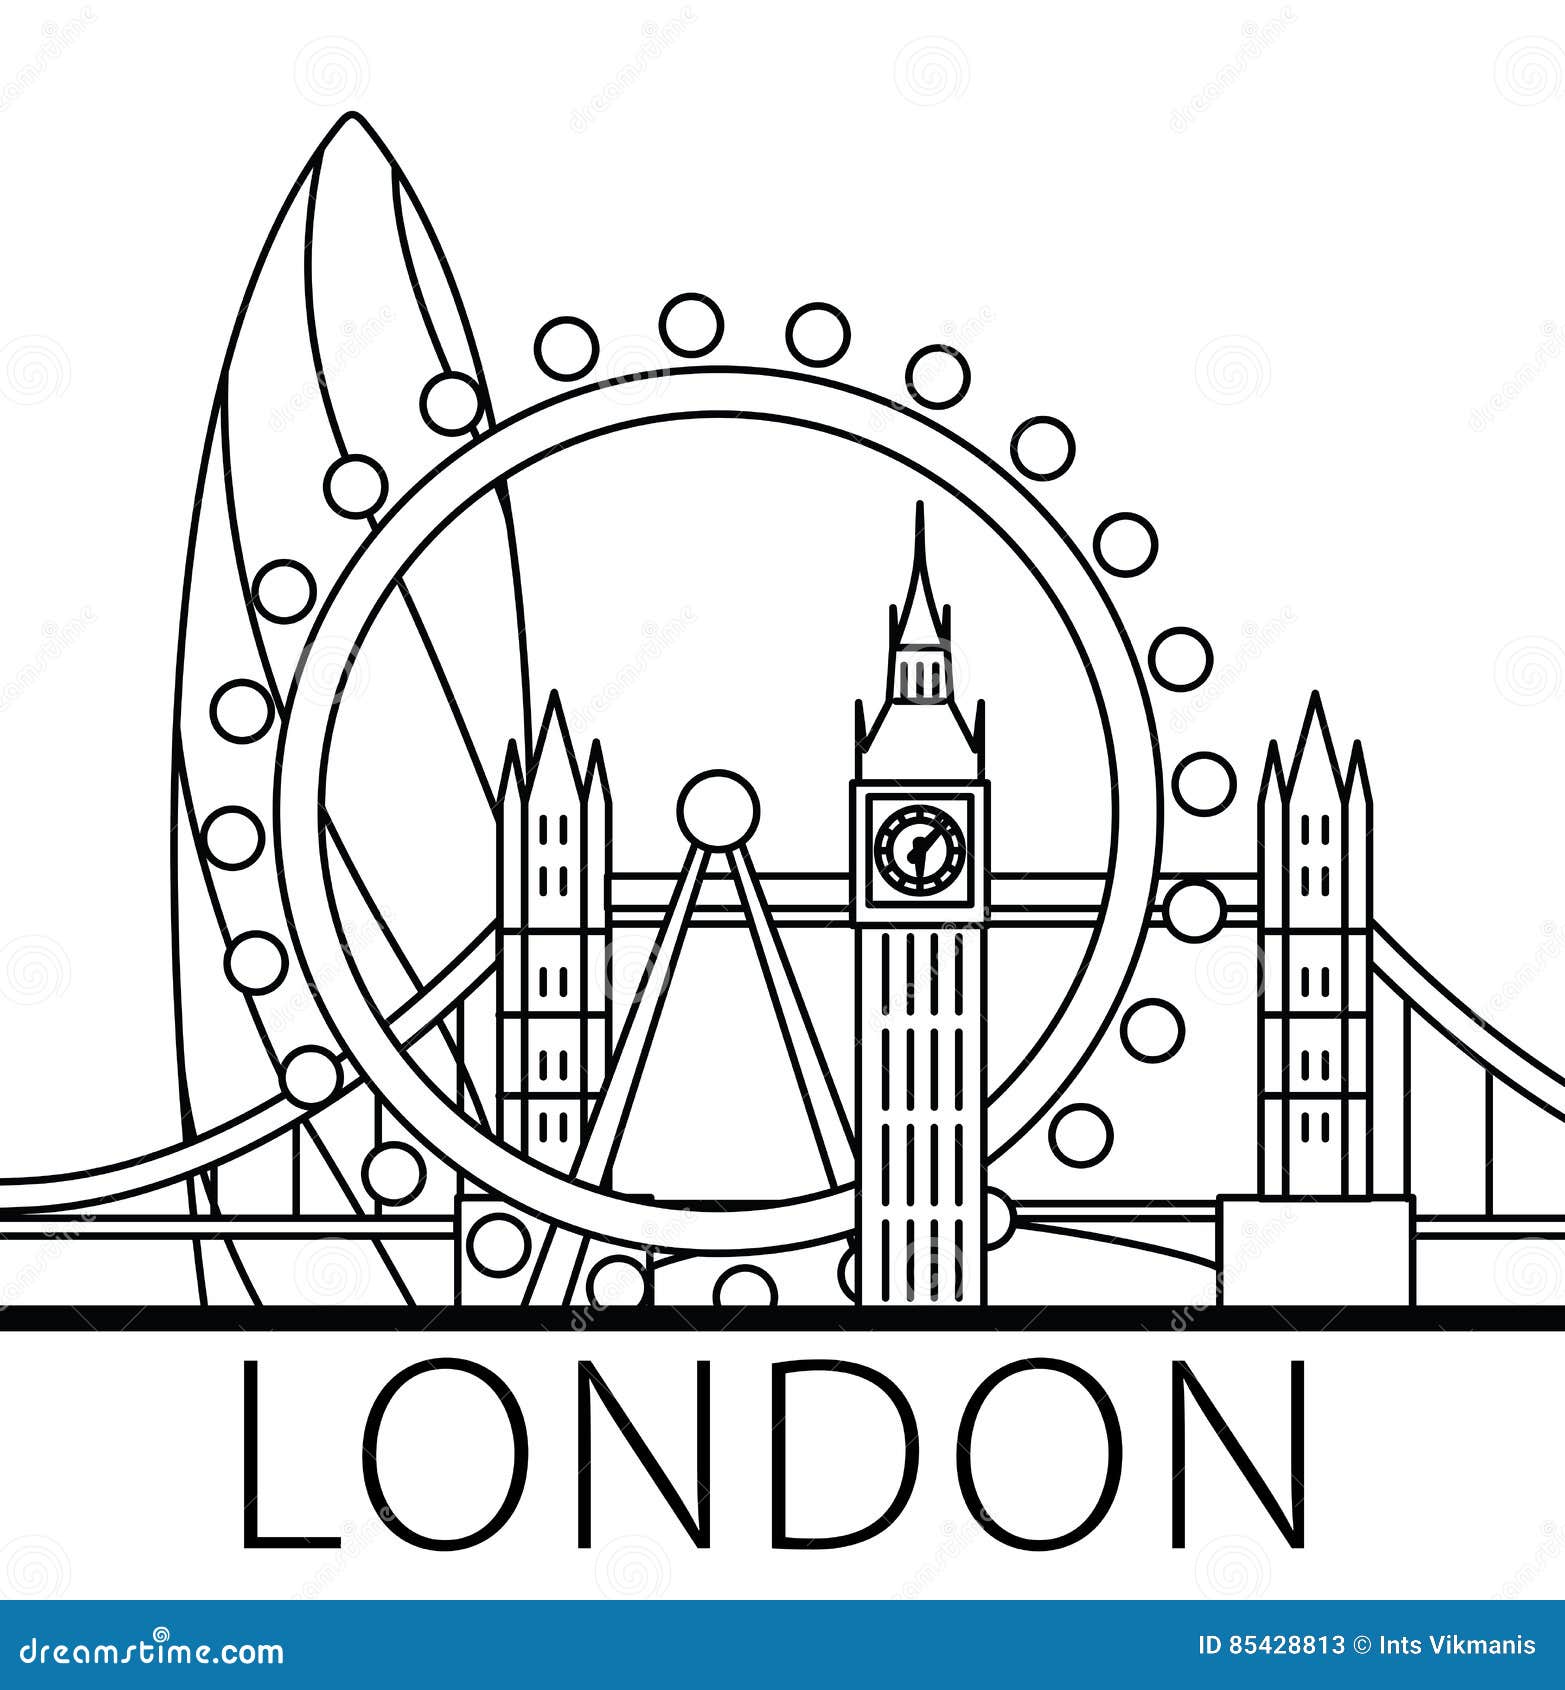 London city skyline editorial stock photo. Illustration of europe